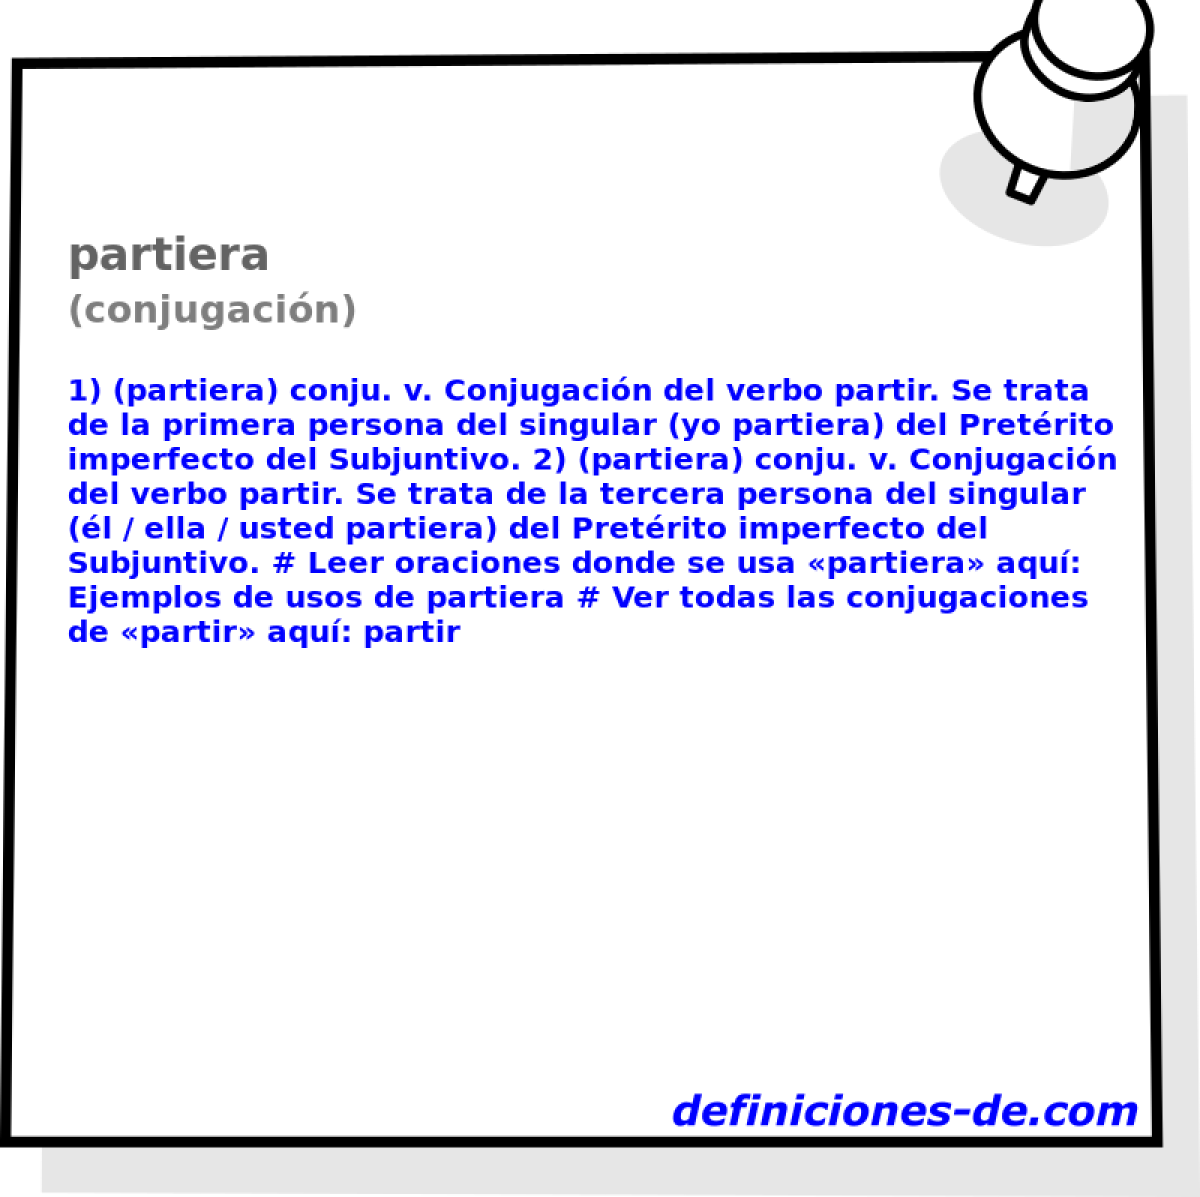 partiera (conjugacin)